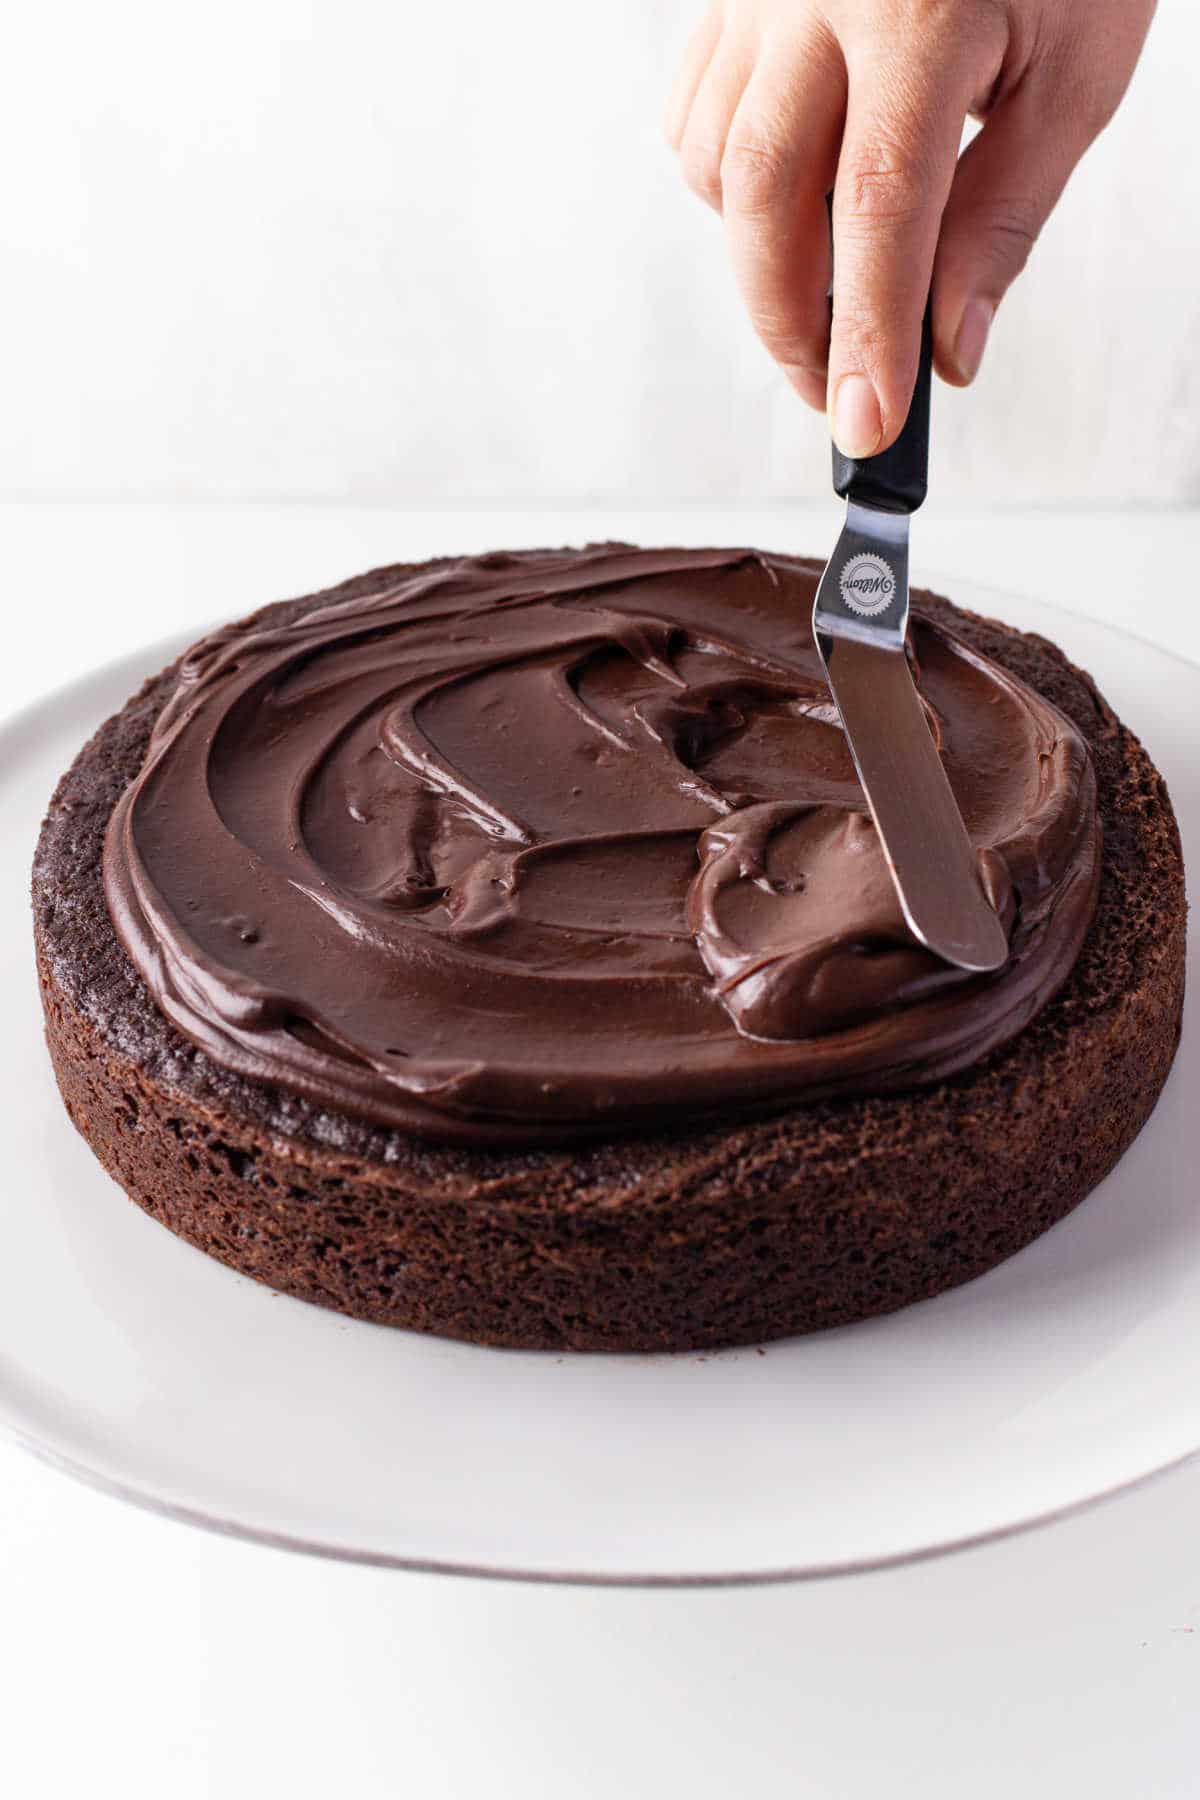 An offset spatula spreading chocolate ganache on a chocolate cake. 